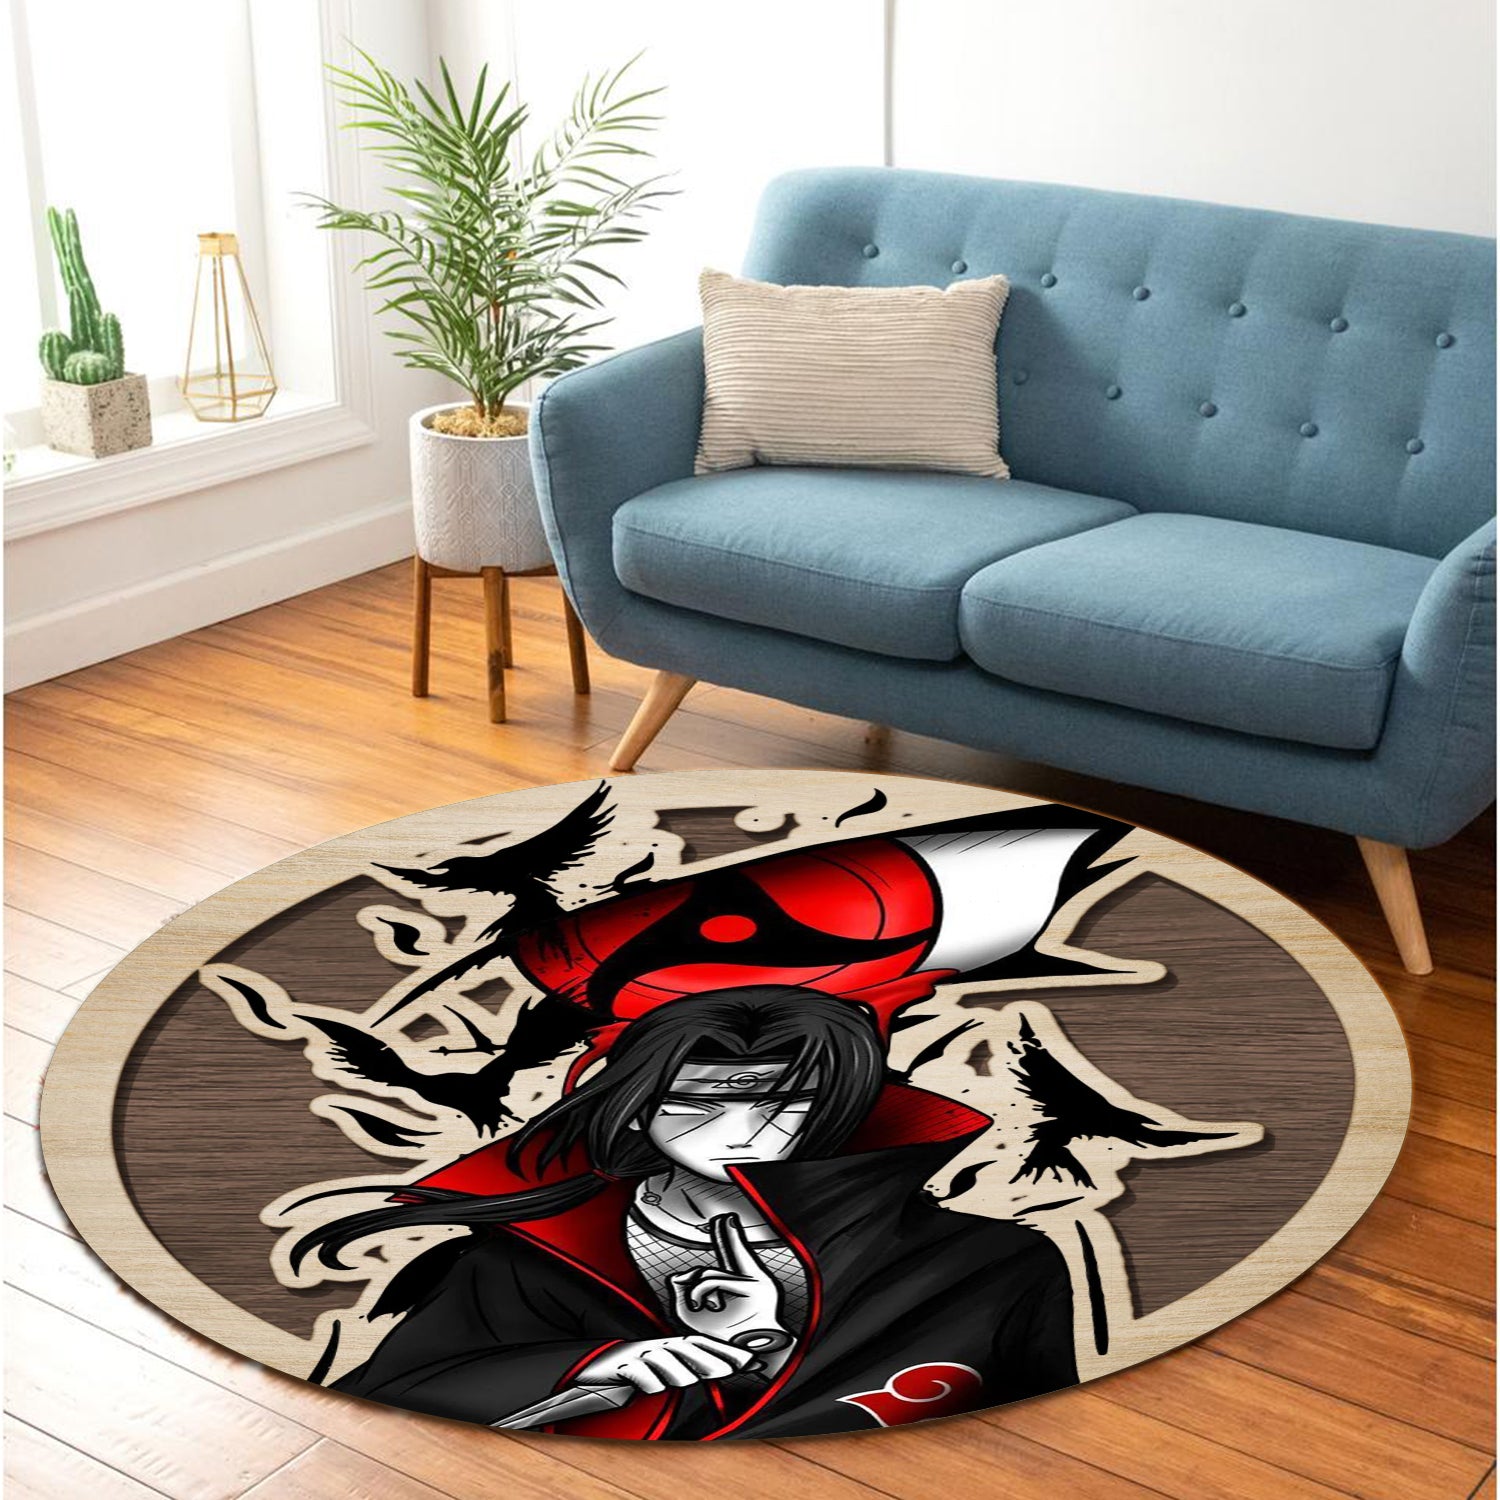 Naruto Itachi Uchiha Round Carpet Rug Bedroom Livingroom Home Decor Nearkii